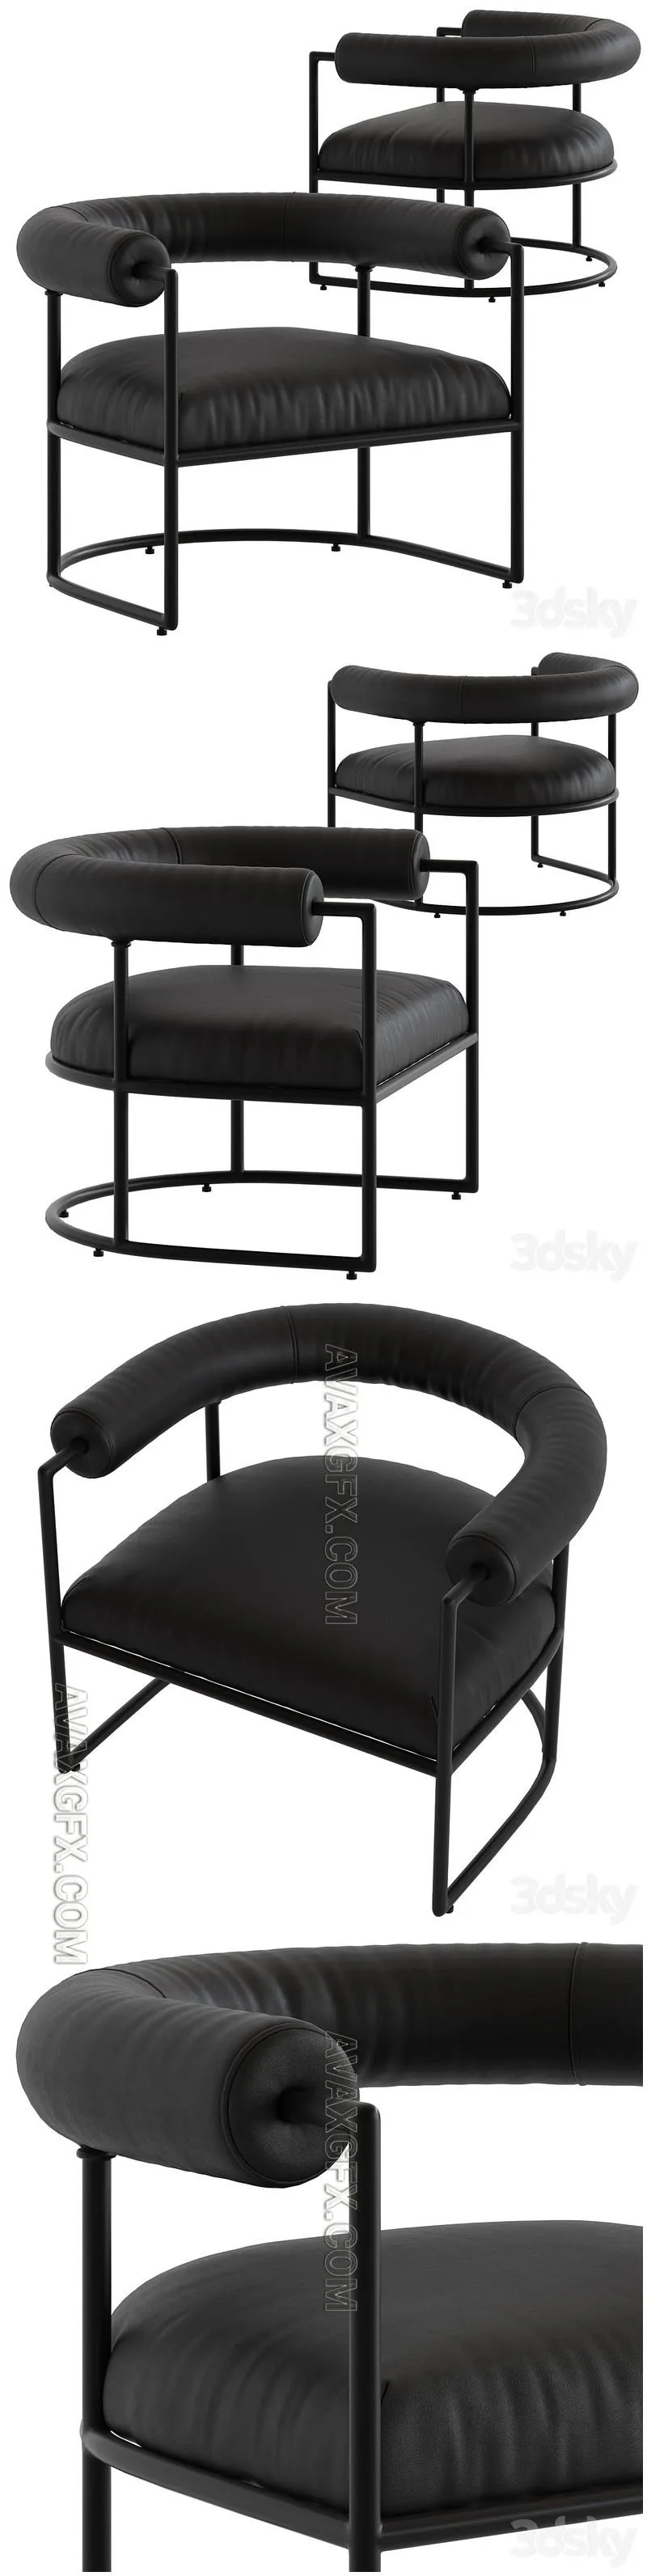 Coco Republic Verbier Chair - 3D Model